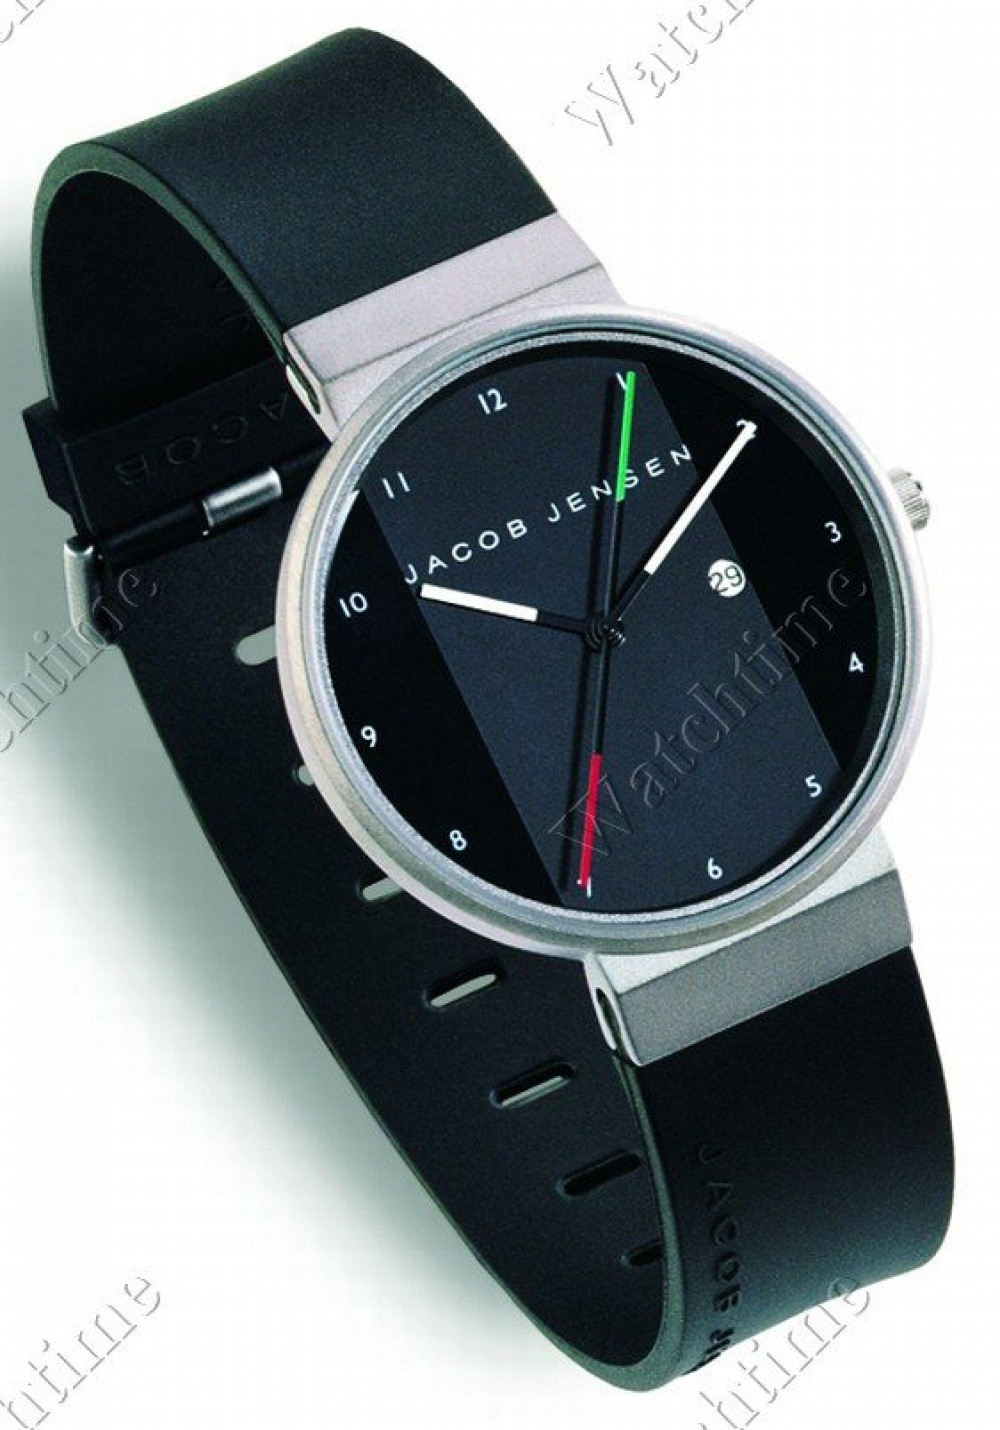 Zegarek firmy Jacob Jensen, model New Series